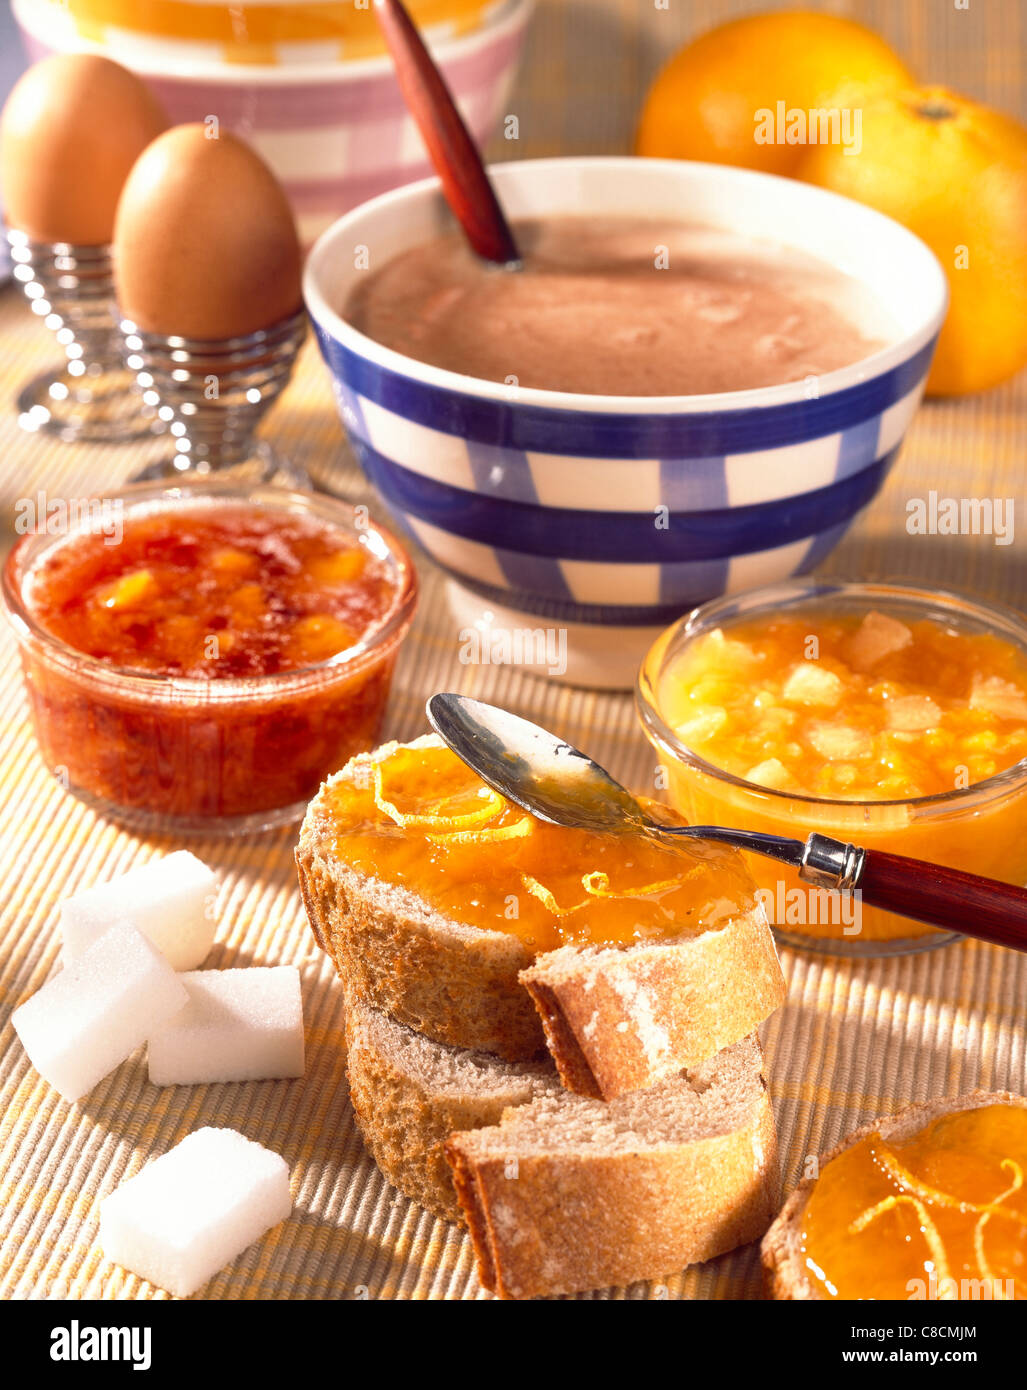 breakfast and jams Stock Photo